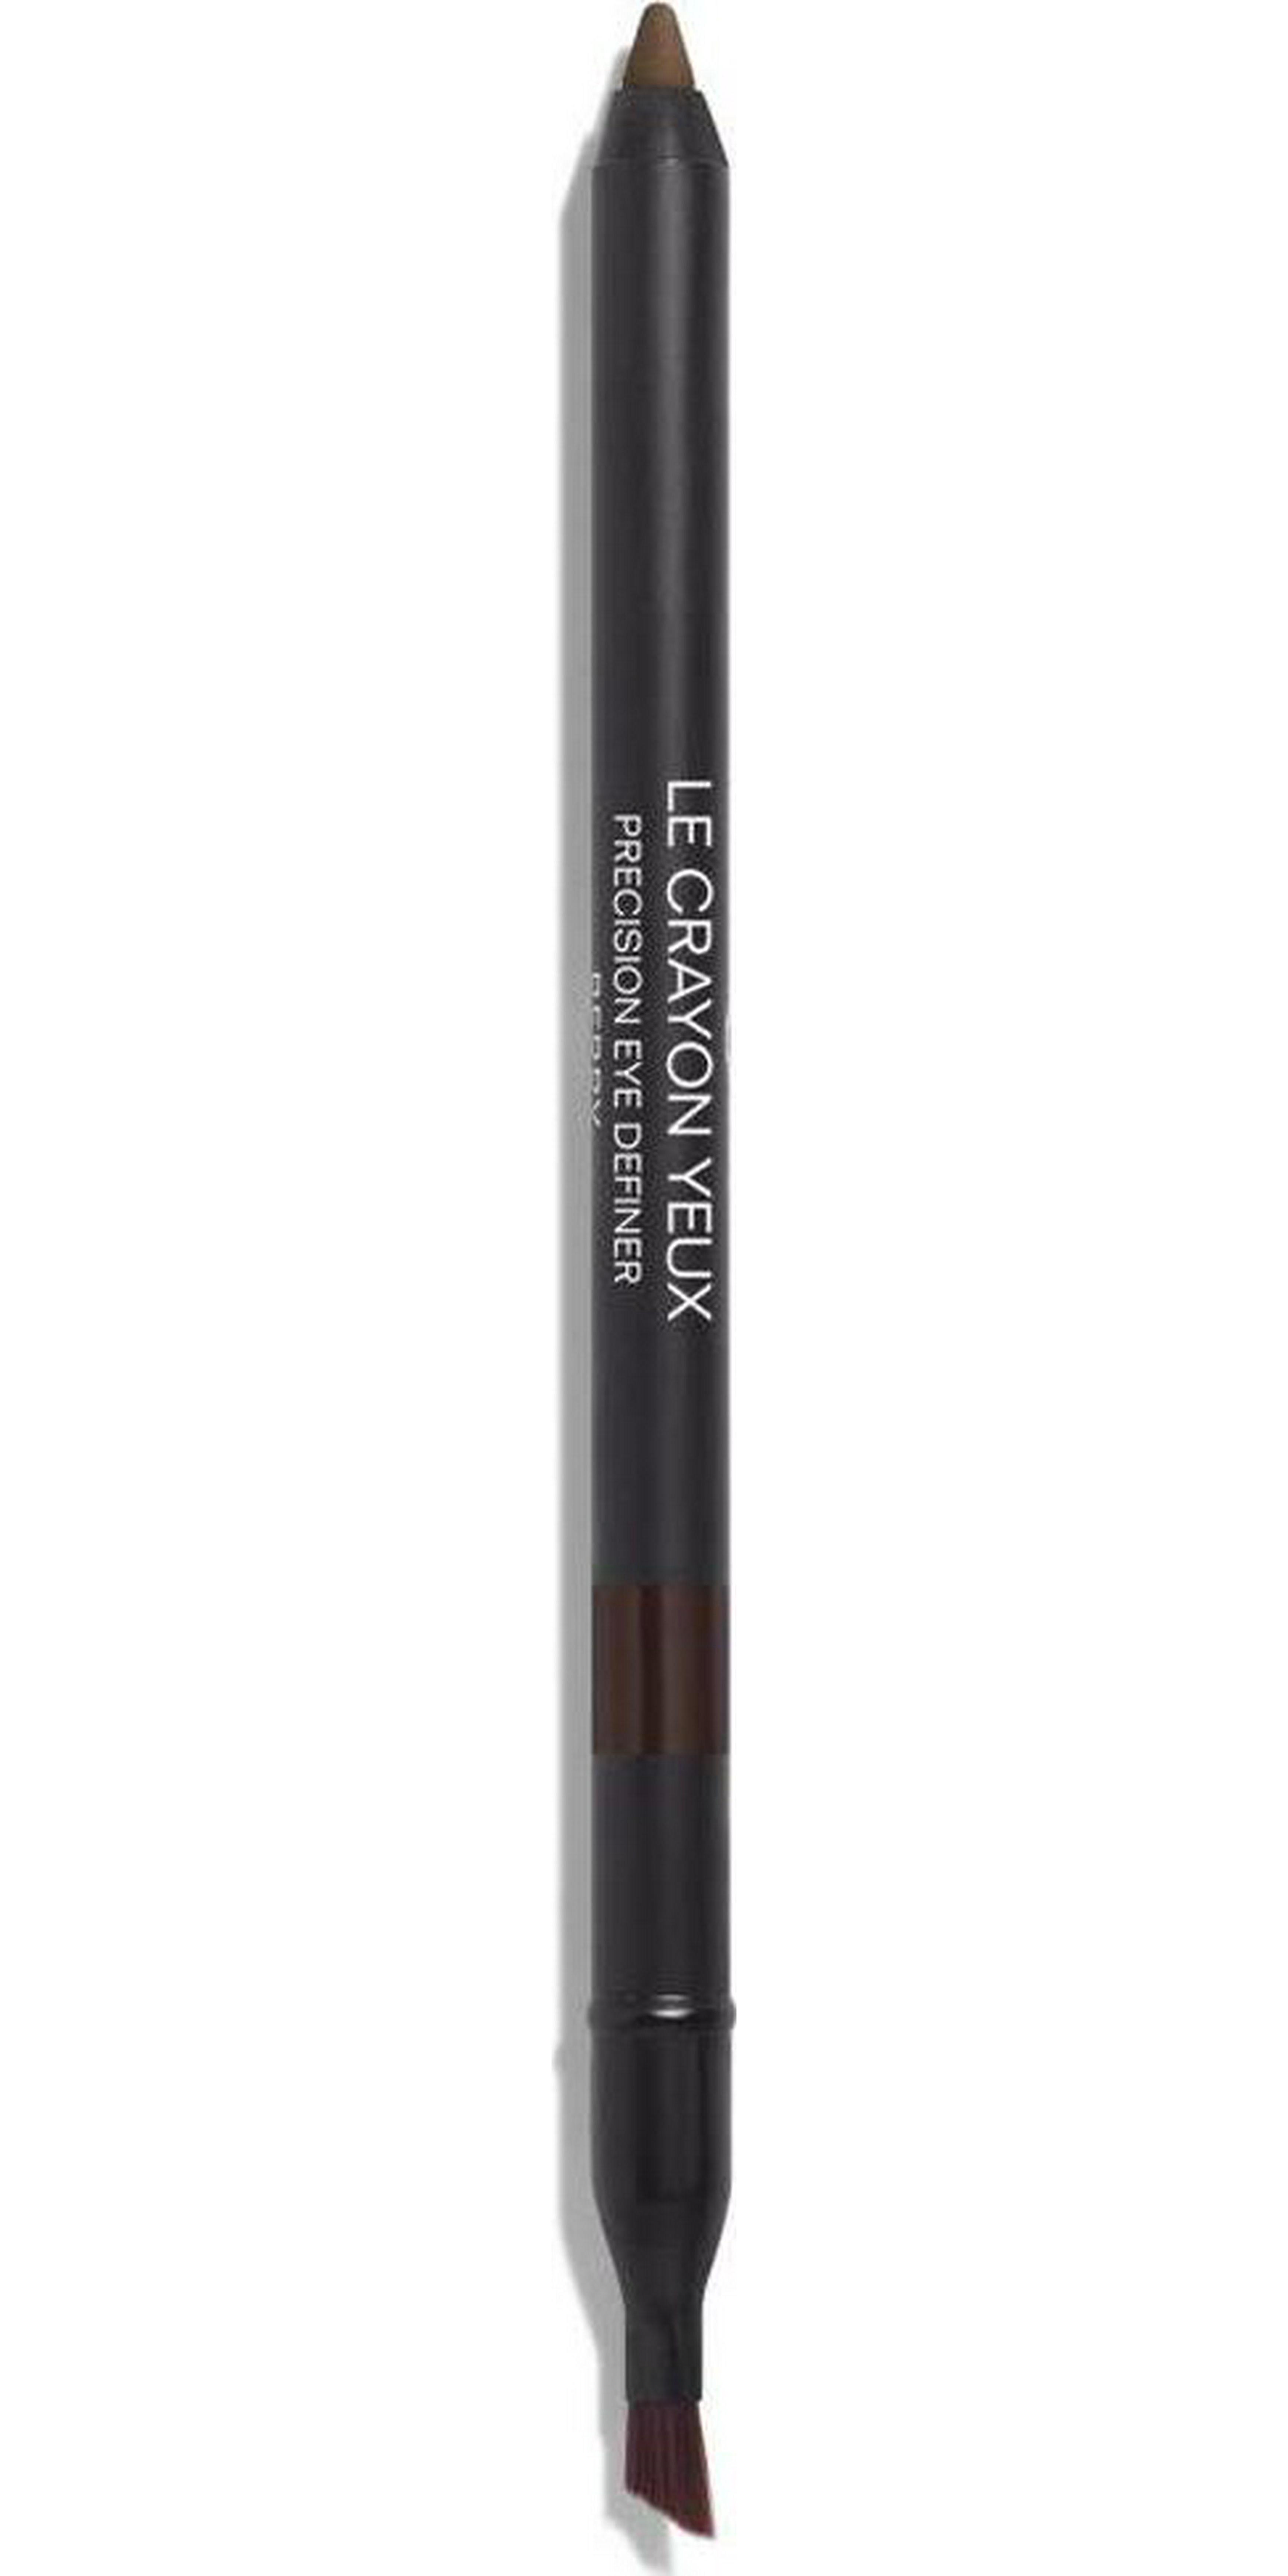 CHANEL Le Crayon Yeux Eye Definer, 01 Noir Black - Sense42 Beauty